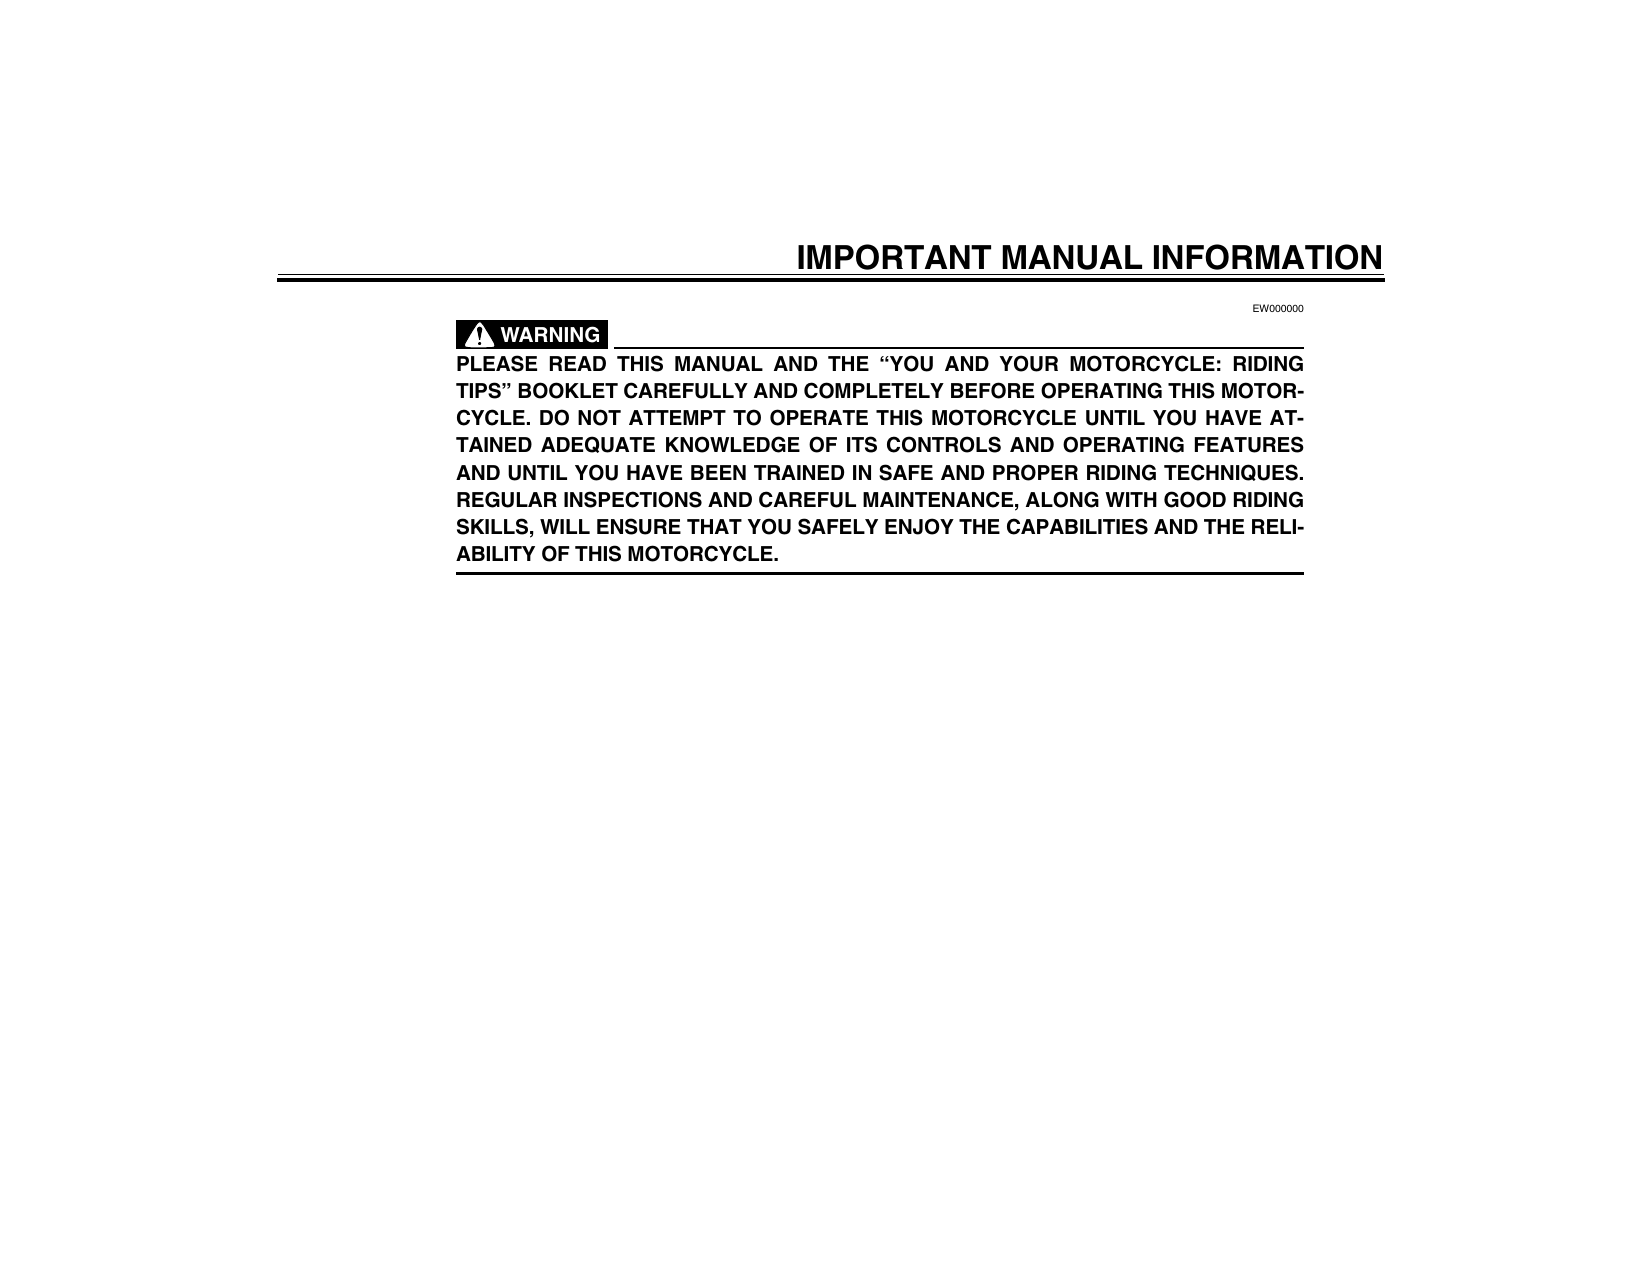 1998-2000 Yamaha V-Star, XVS 650 service, repair manual Preview image 5